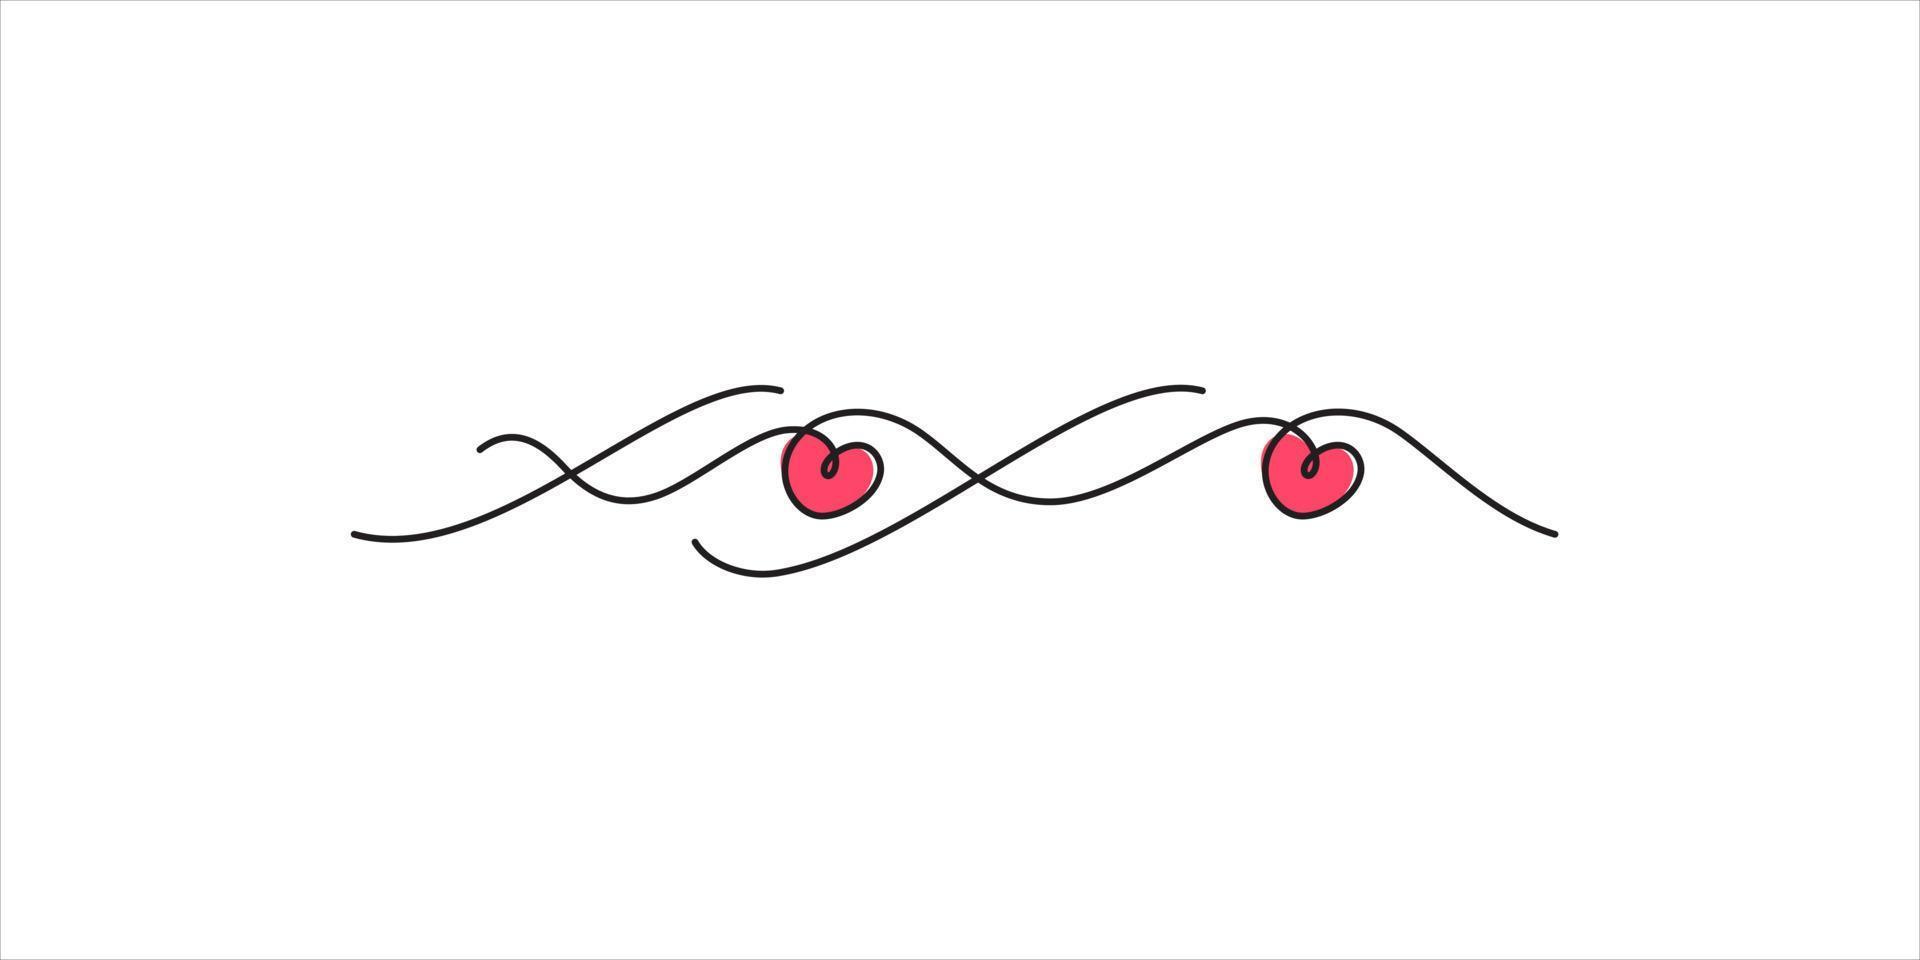 xoxo hugs and kisses lettering design line art vector illustration